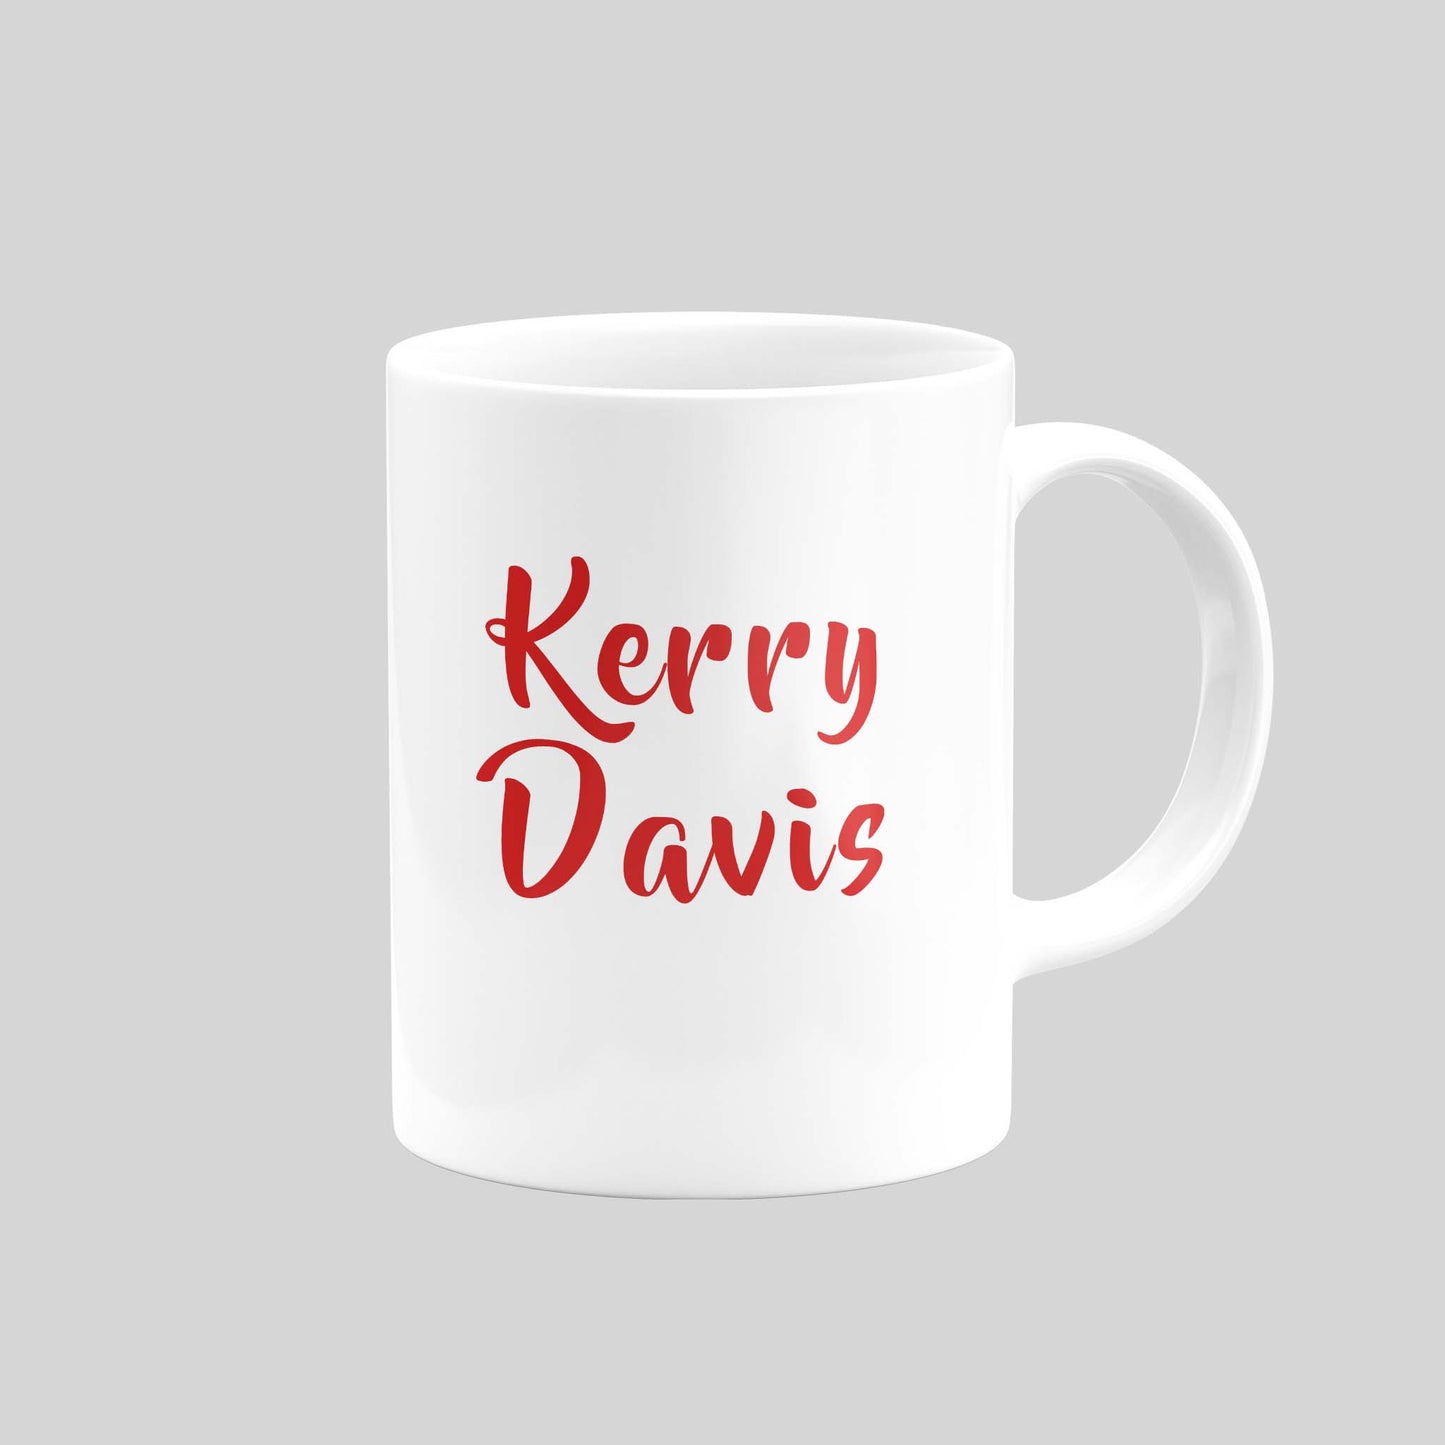 Kerry Davis Mug